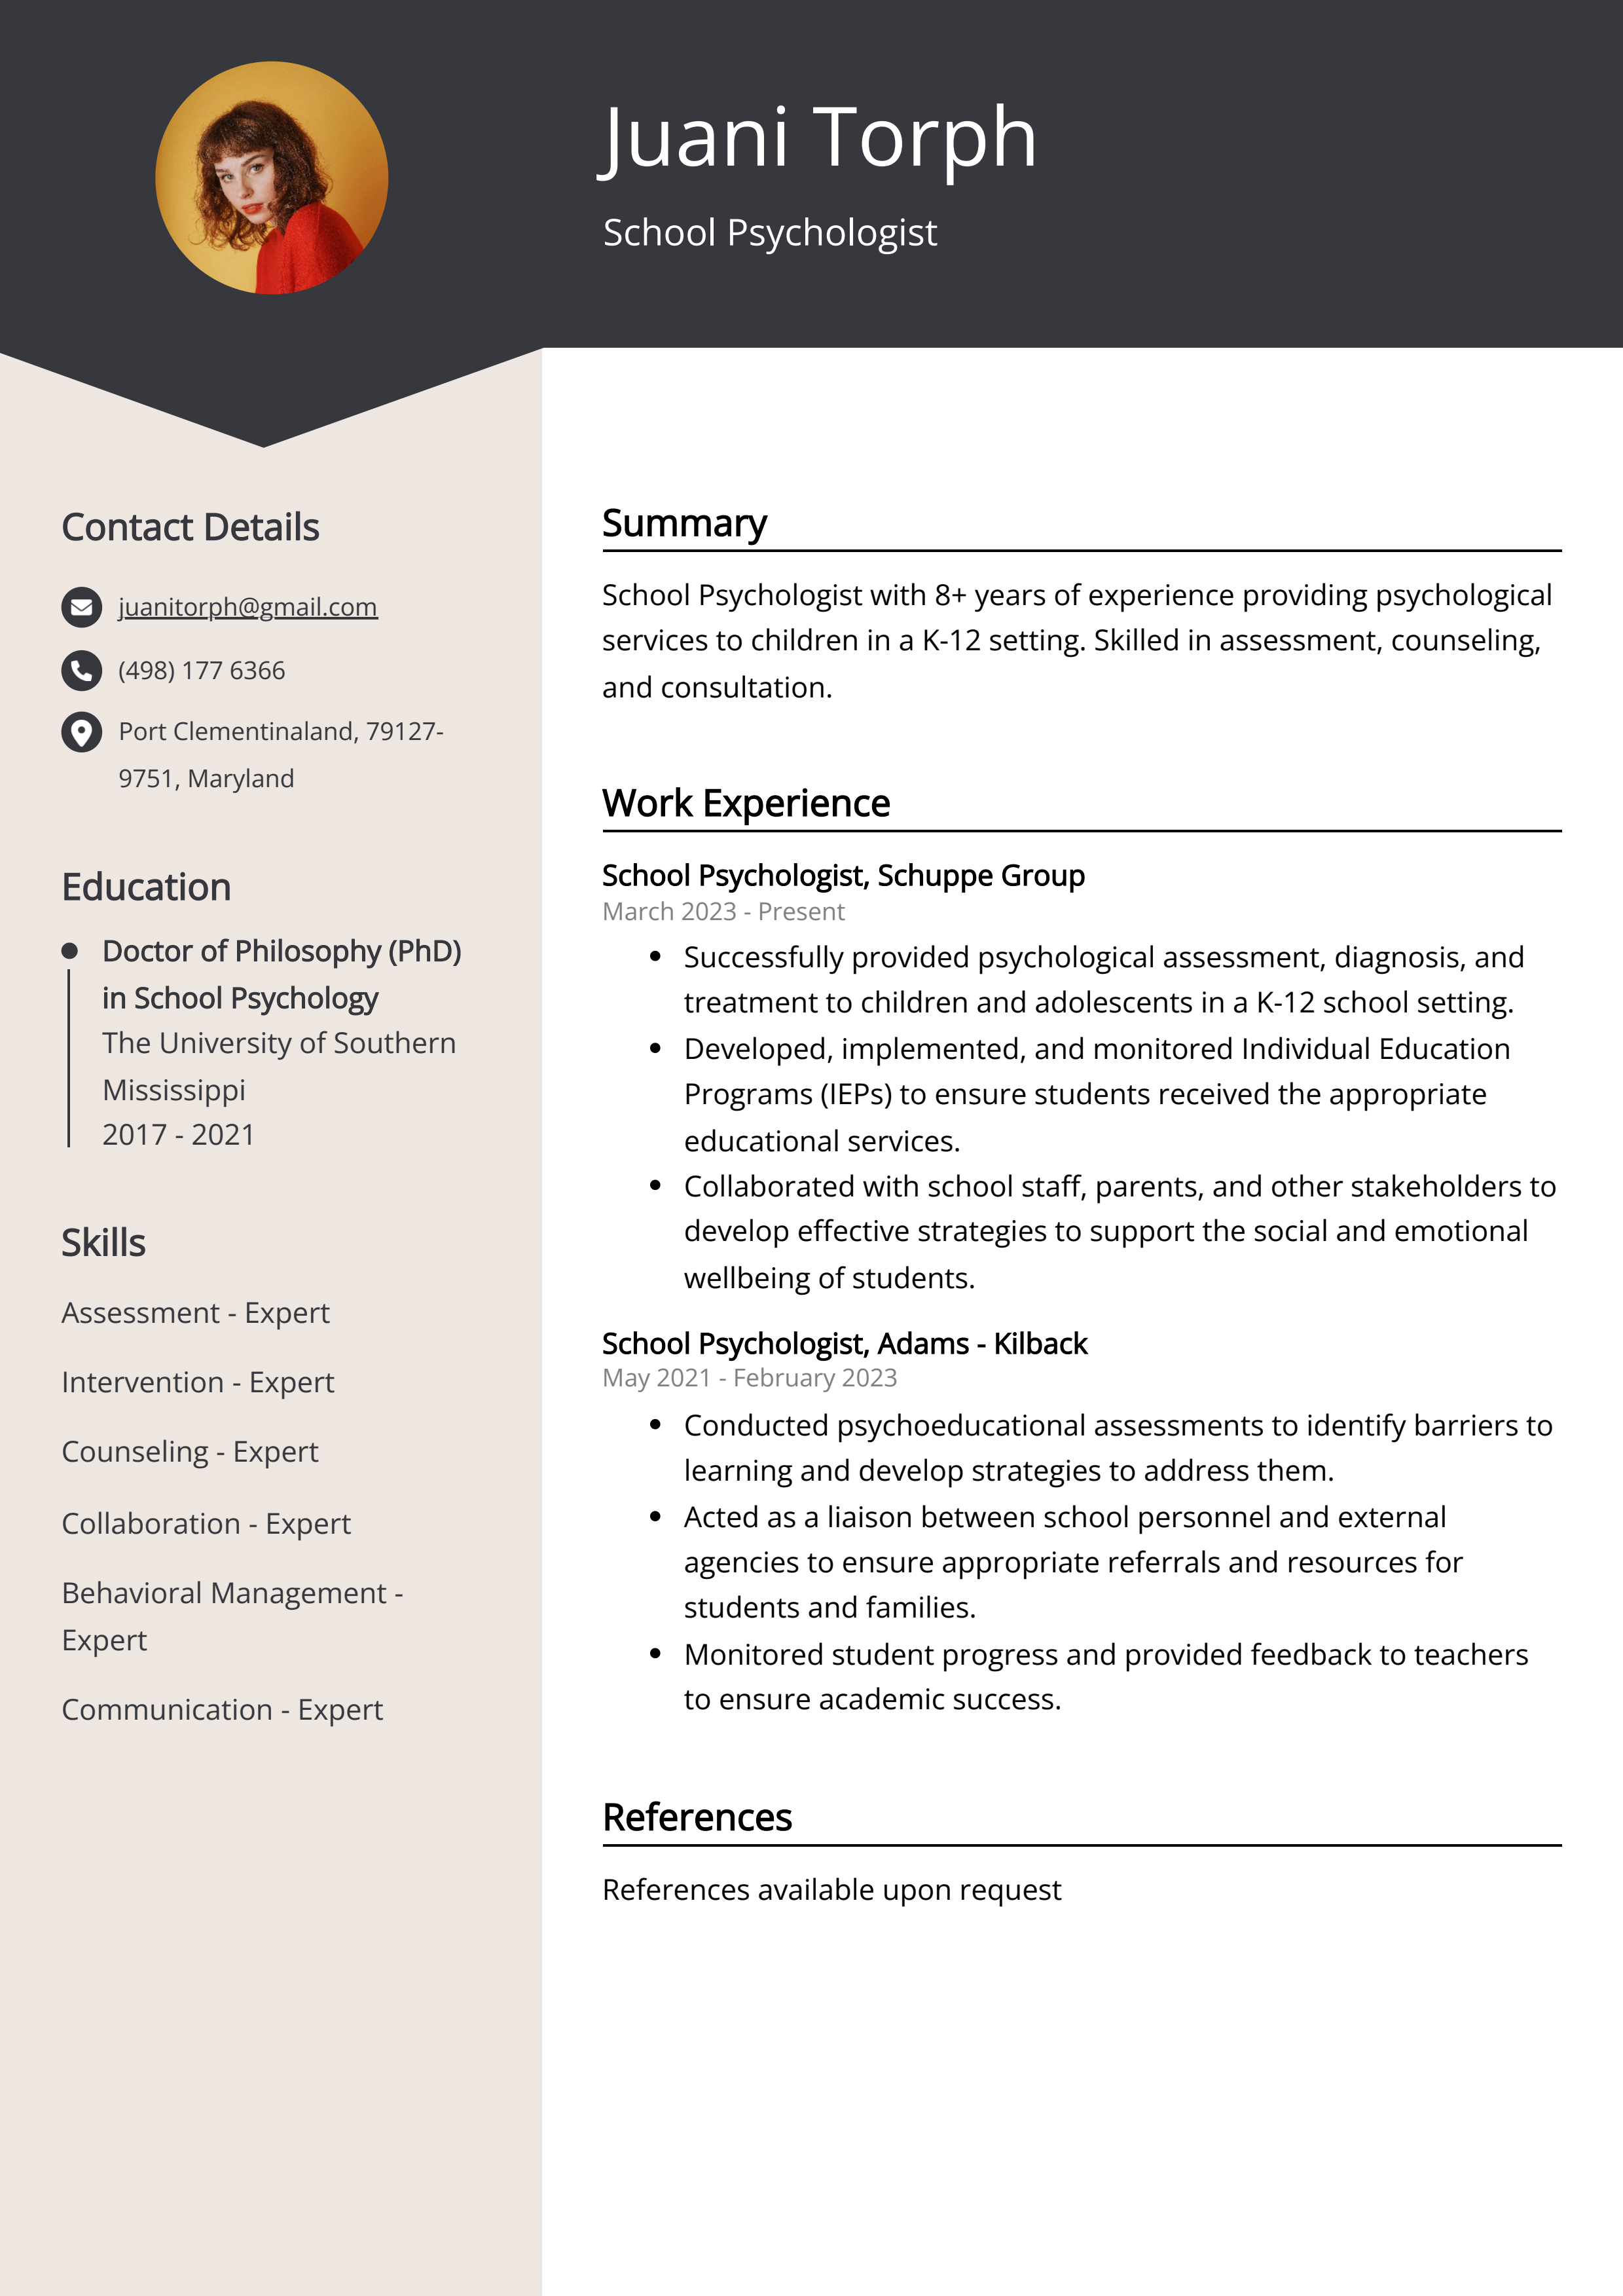 School Psychologist CV Example